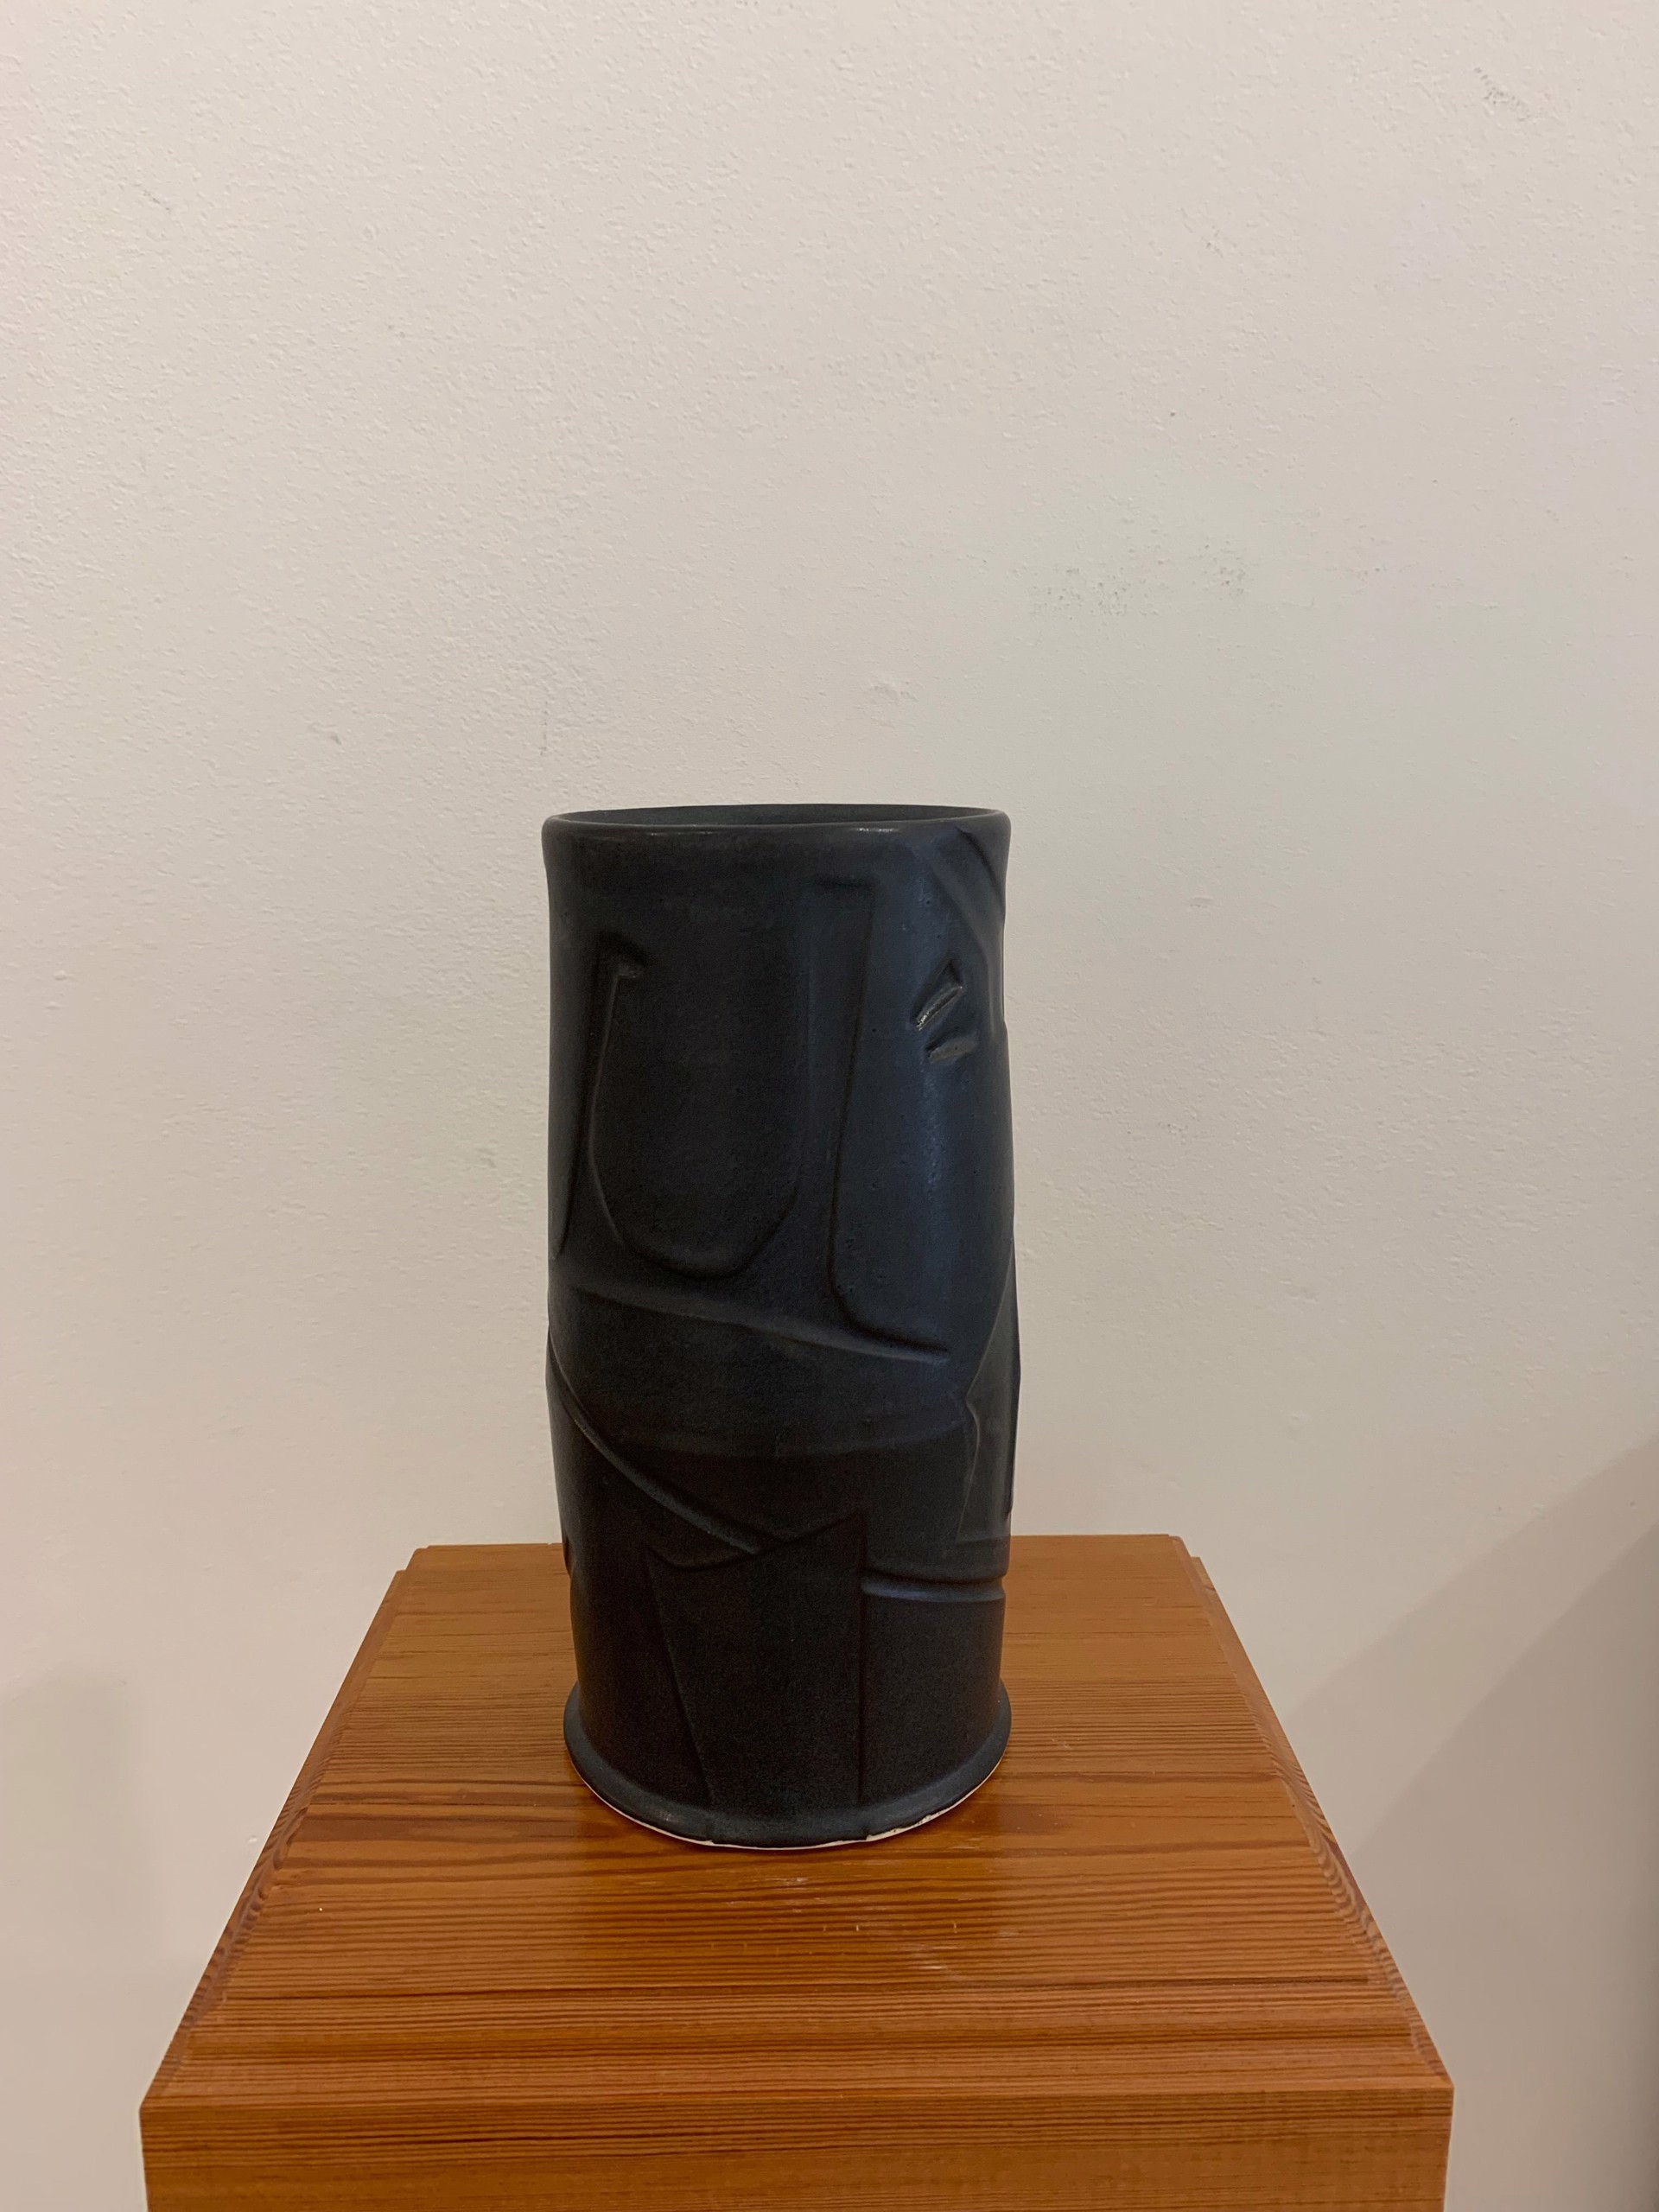 Small Black Vase by Steve Kelly